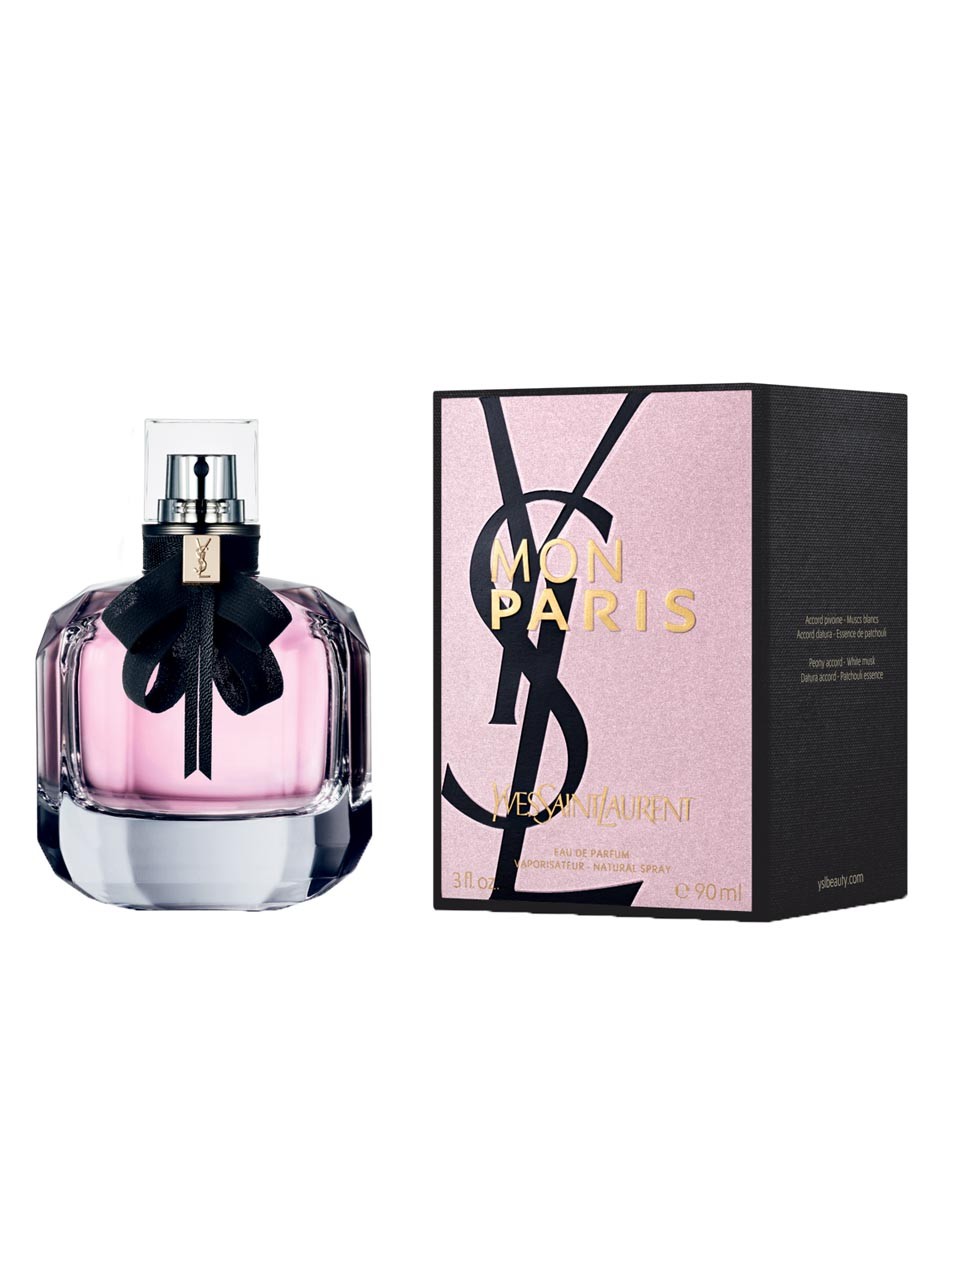 Купить Парфюмерная вода Yves Saint Laurent, Yves Saint Laurent Mon Paris Eau De Parfum 50.0ml, Франция